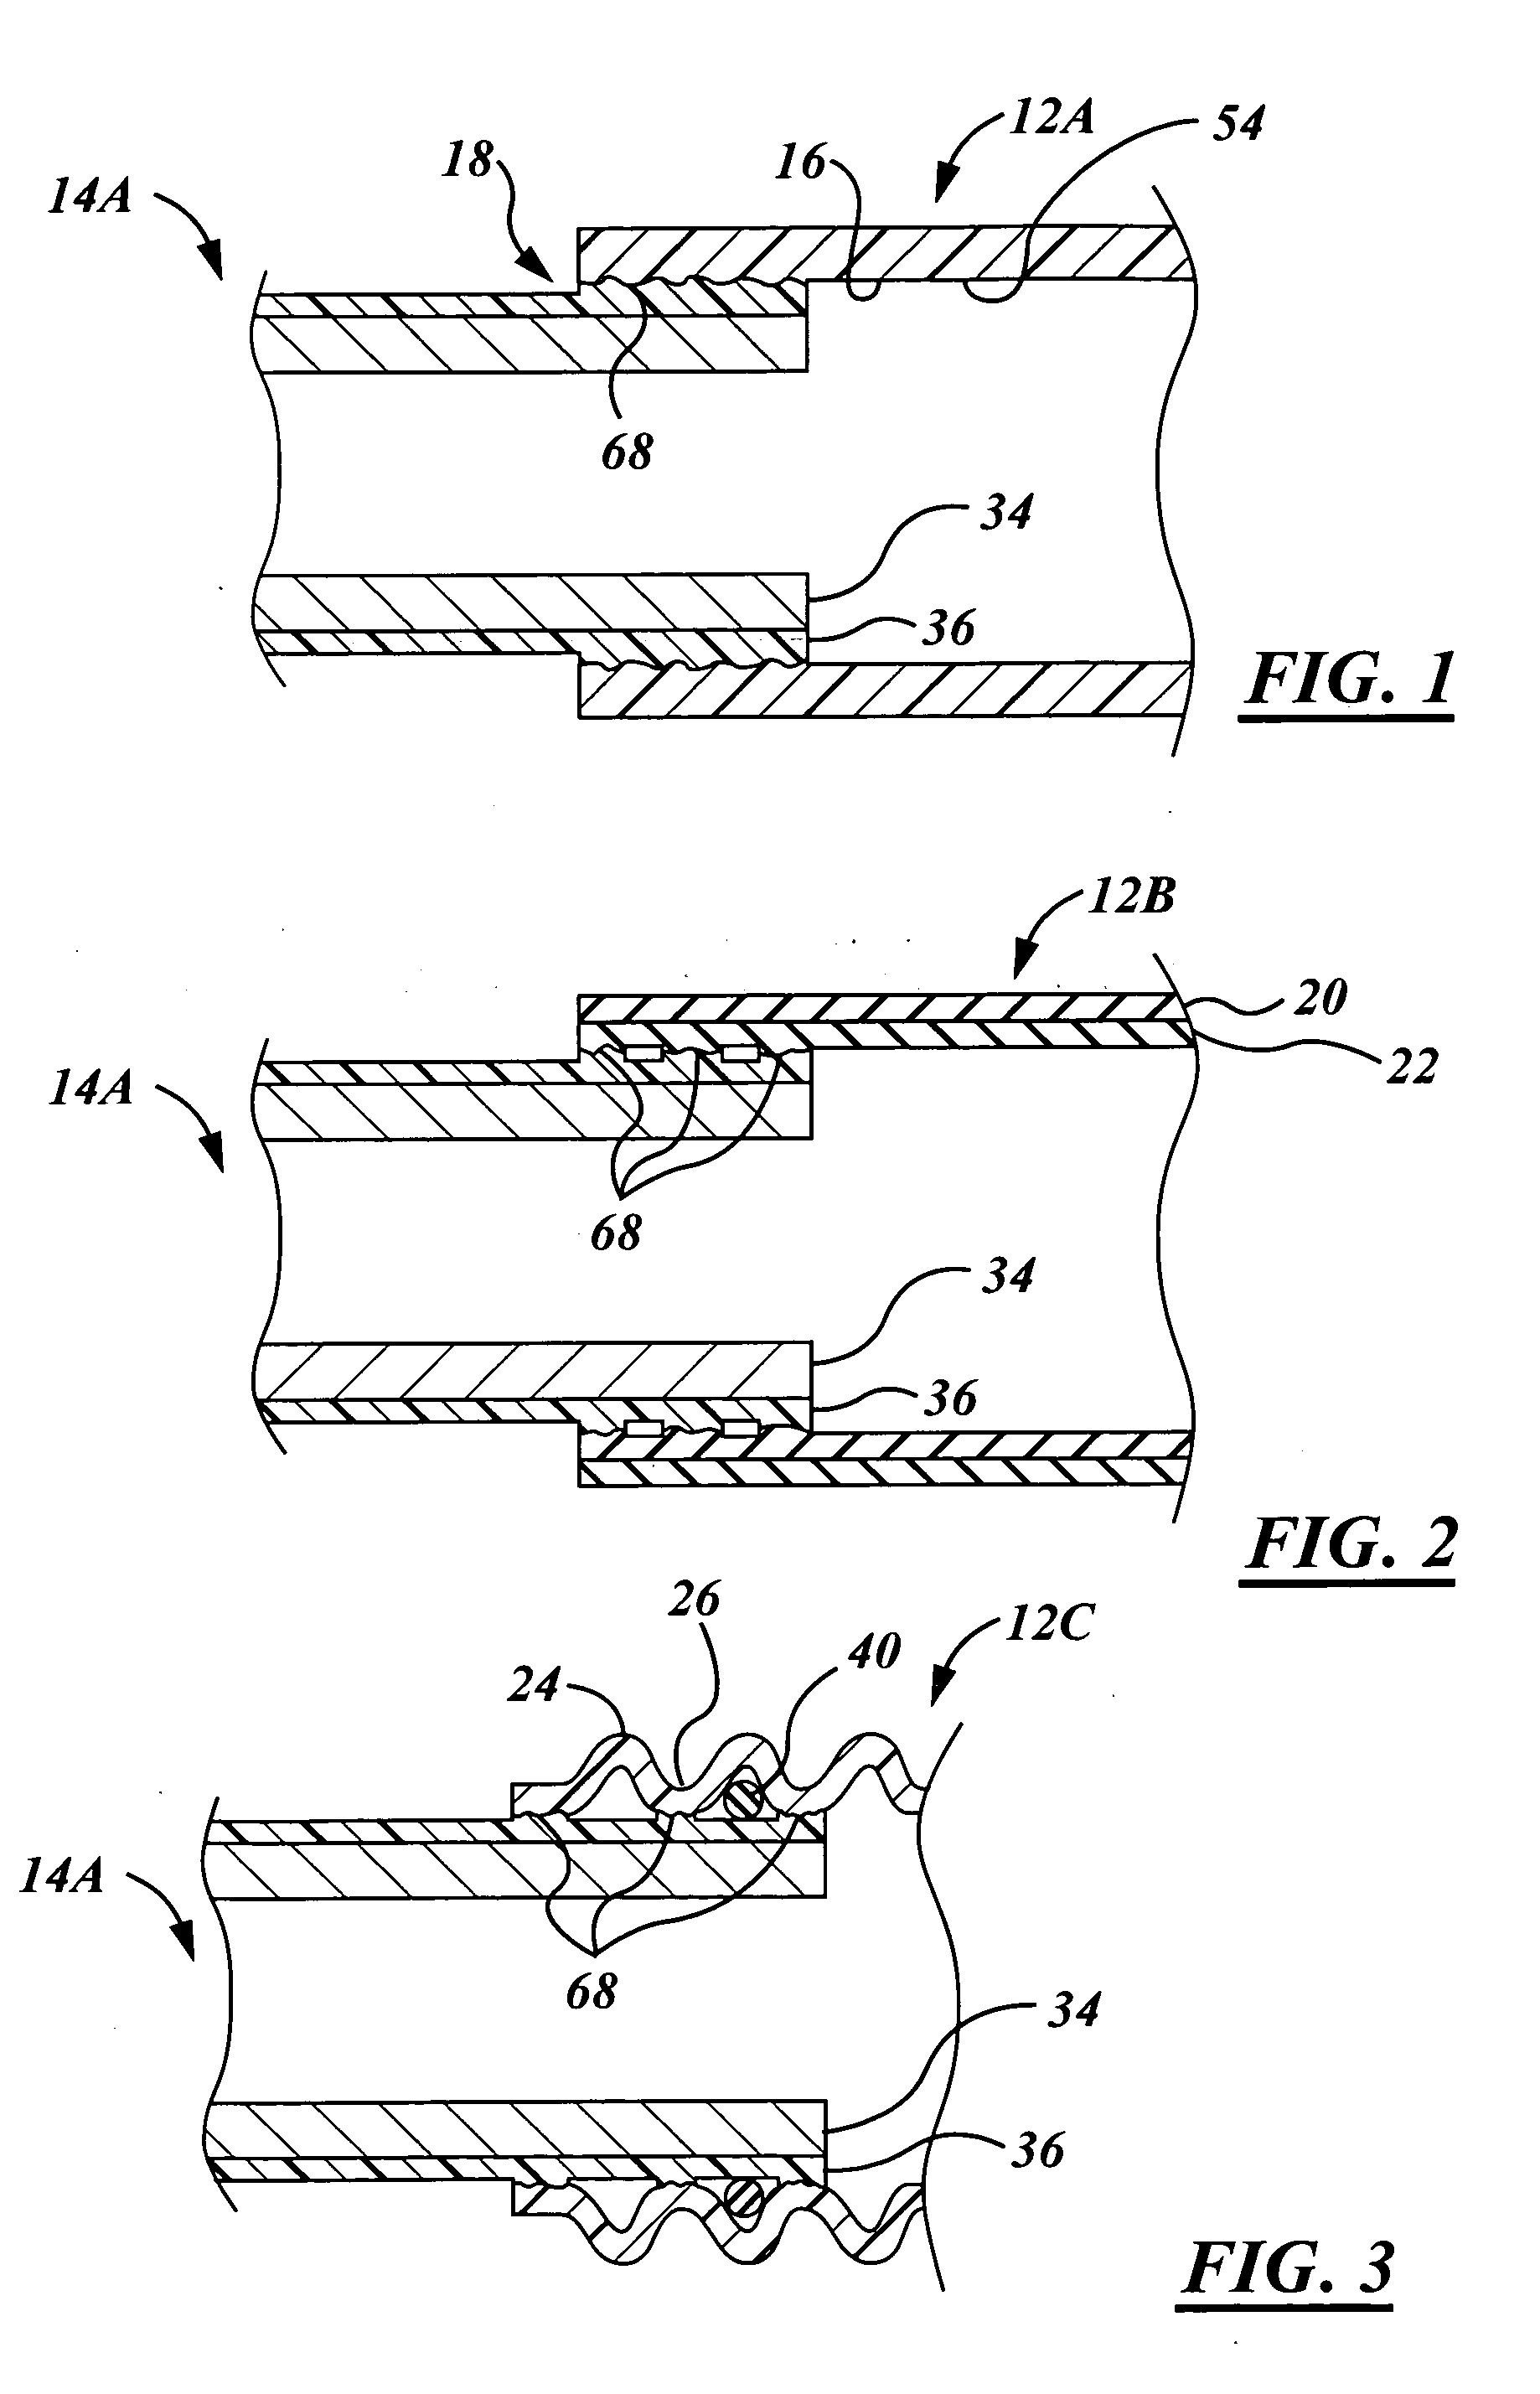 Method of coupling polymeric tubing to polymeric coated metal tubing